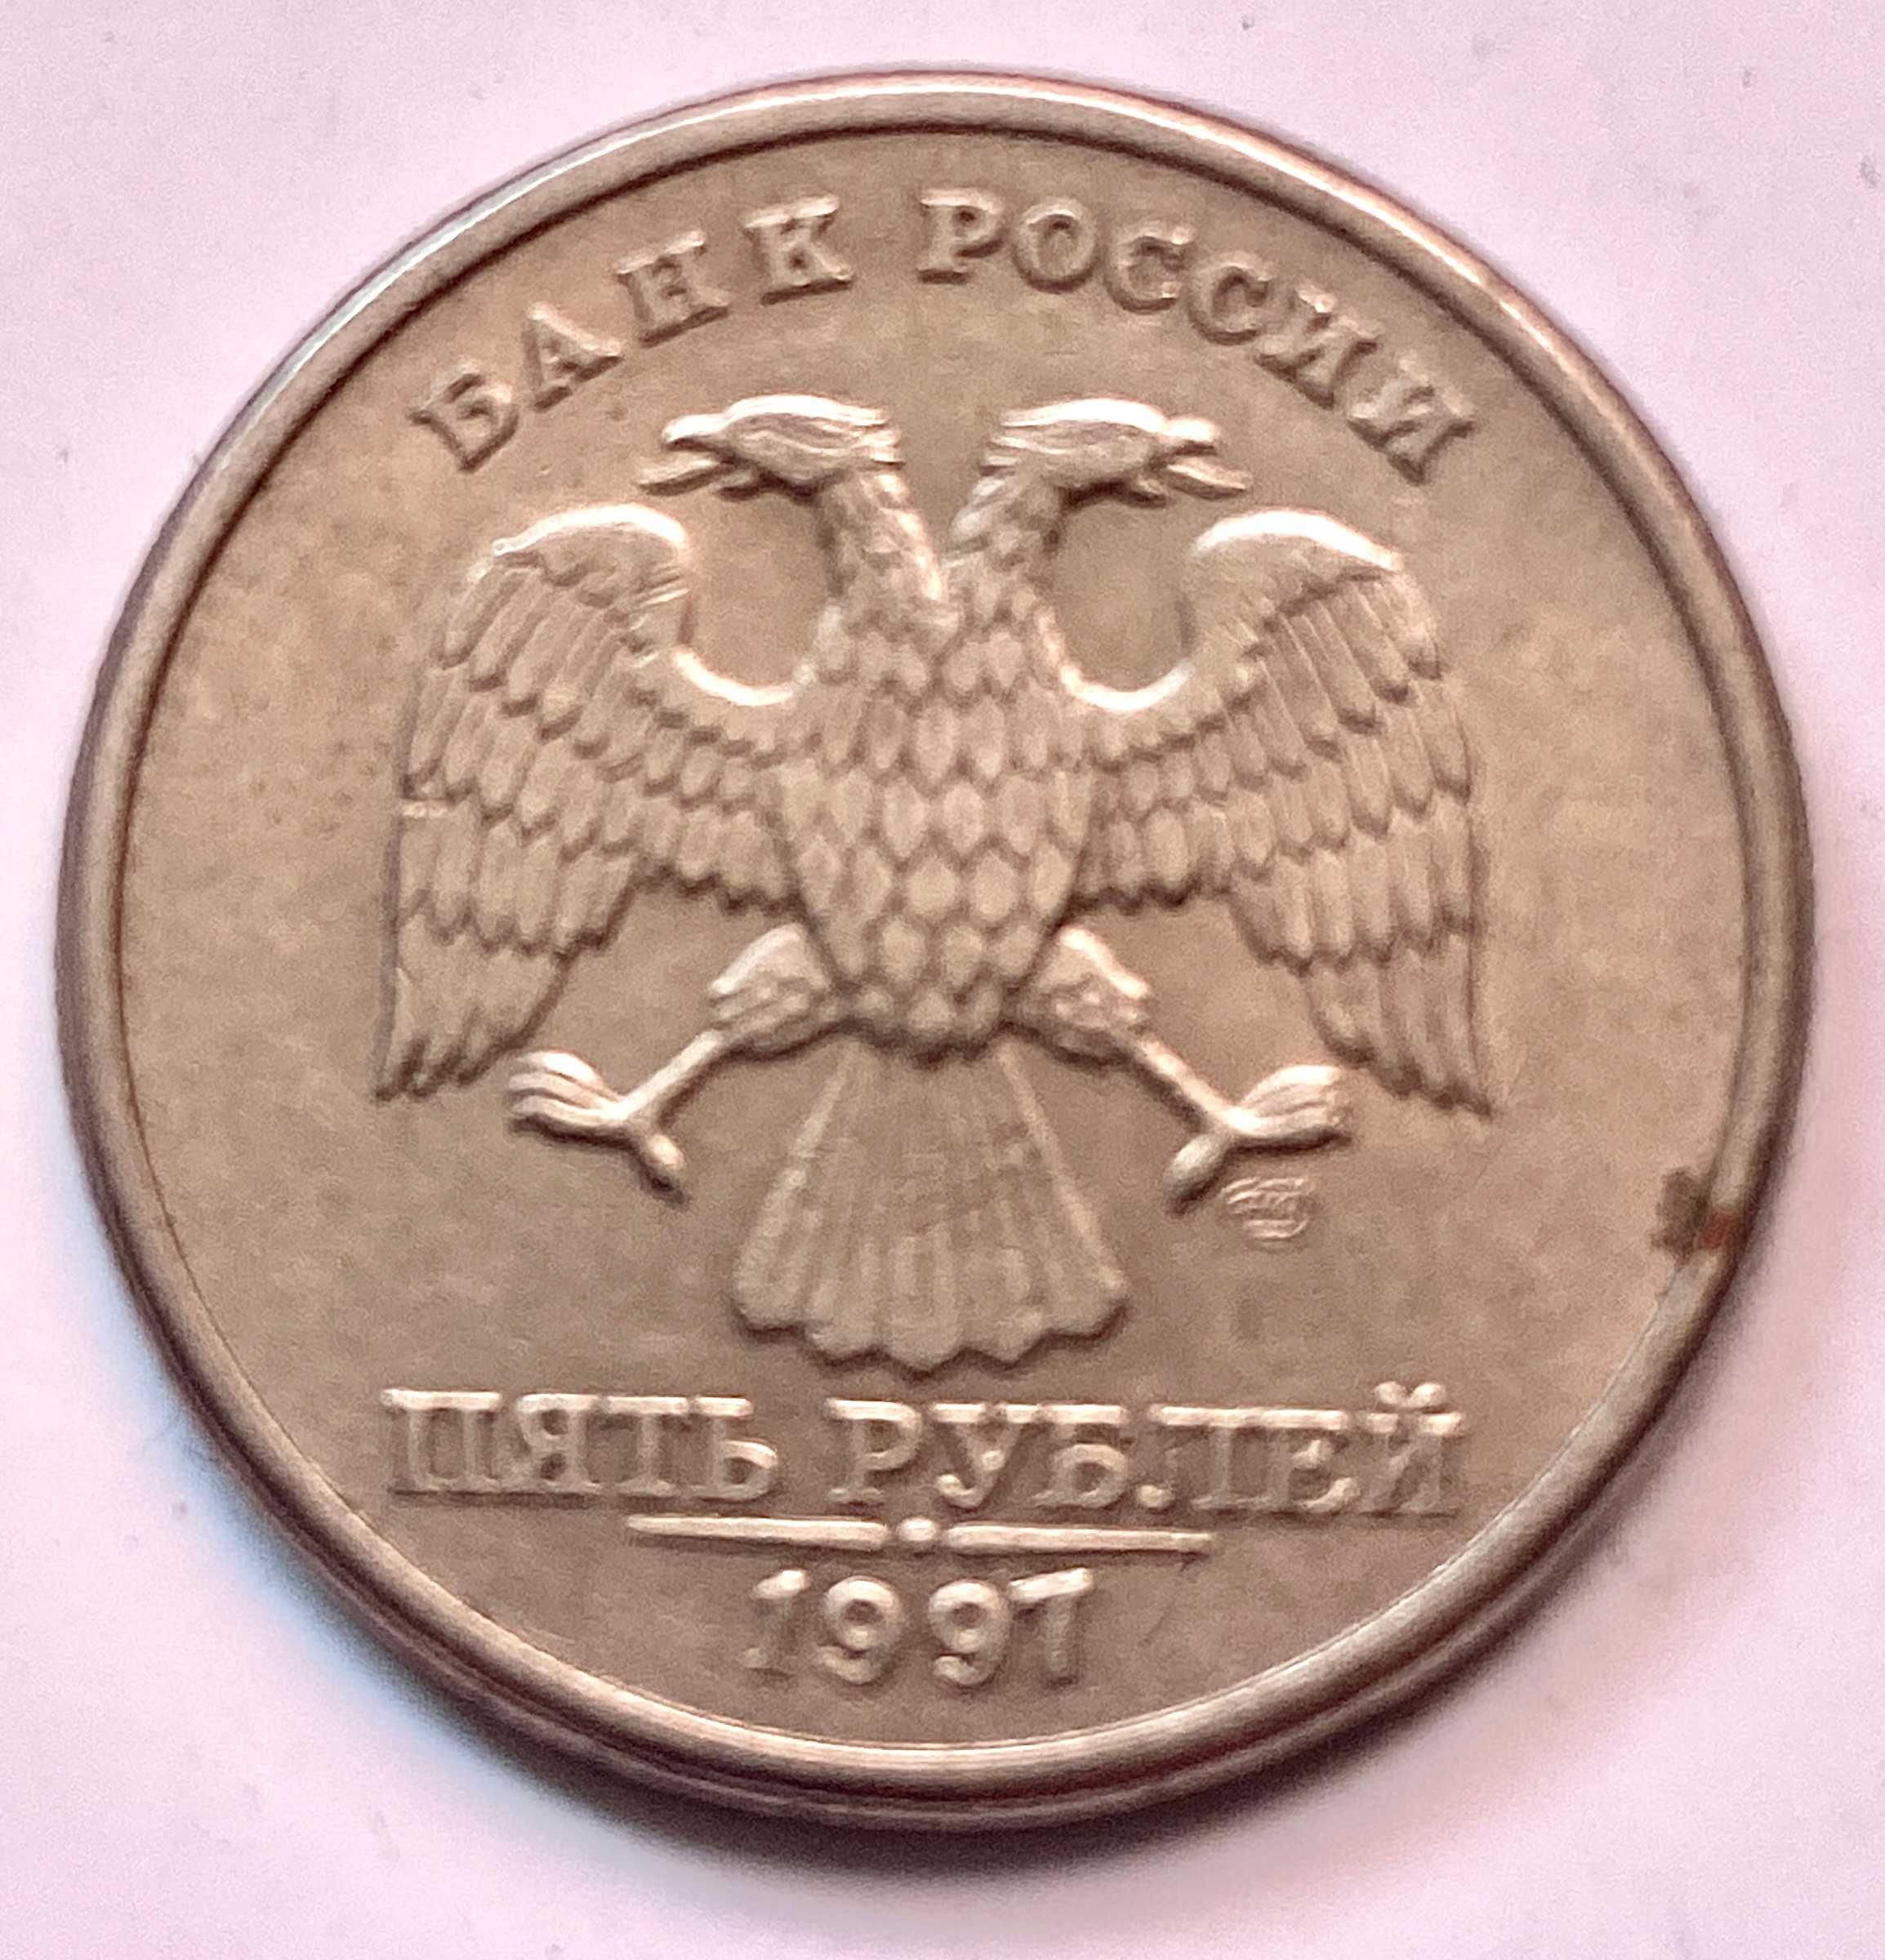 Moneta Rosja - 5 RUBLI 1997r